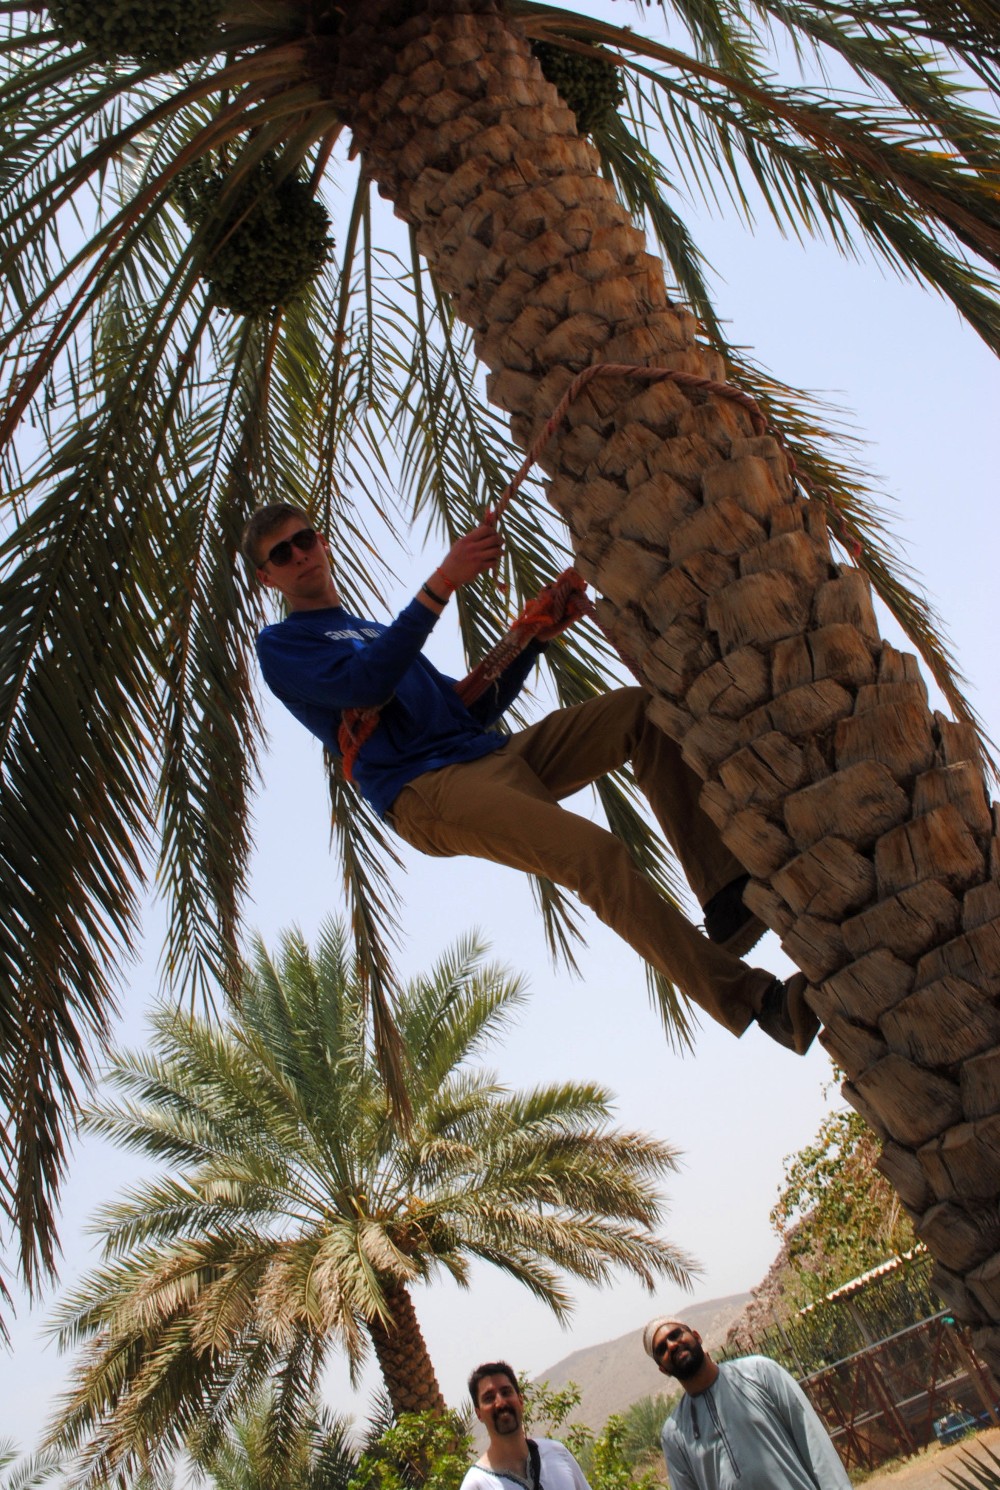 Charlie Creech photo of guy climbing a tree